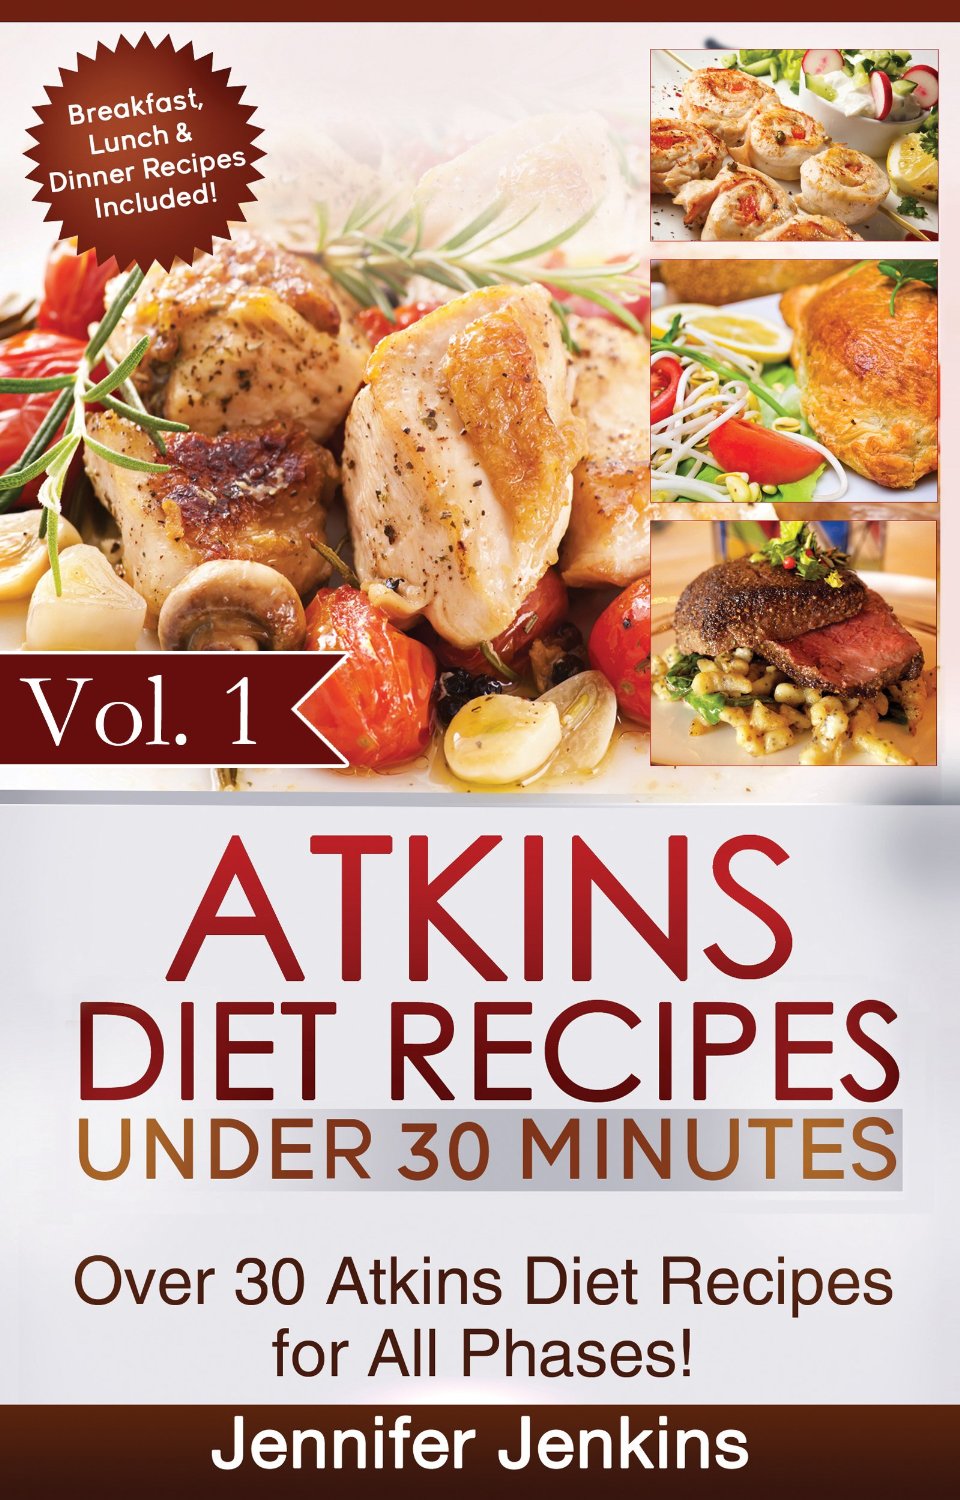 Atkins Diet Recipes Under 30 Minutes Vol. 1 by Jennifer Jenkins